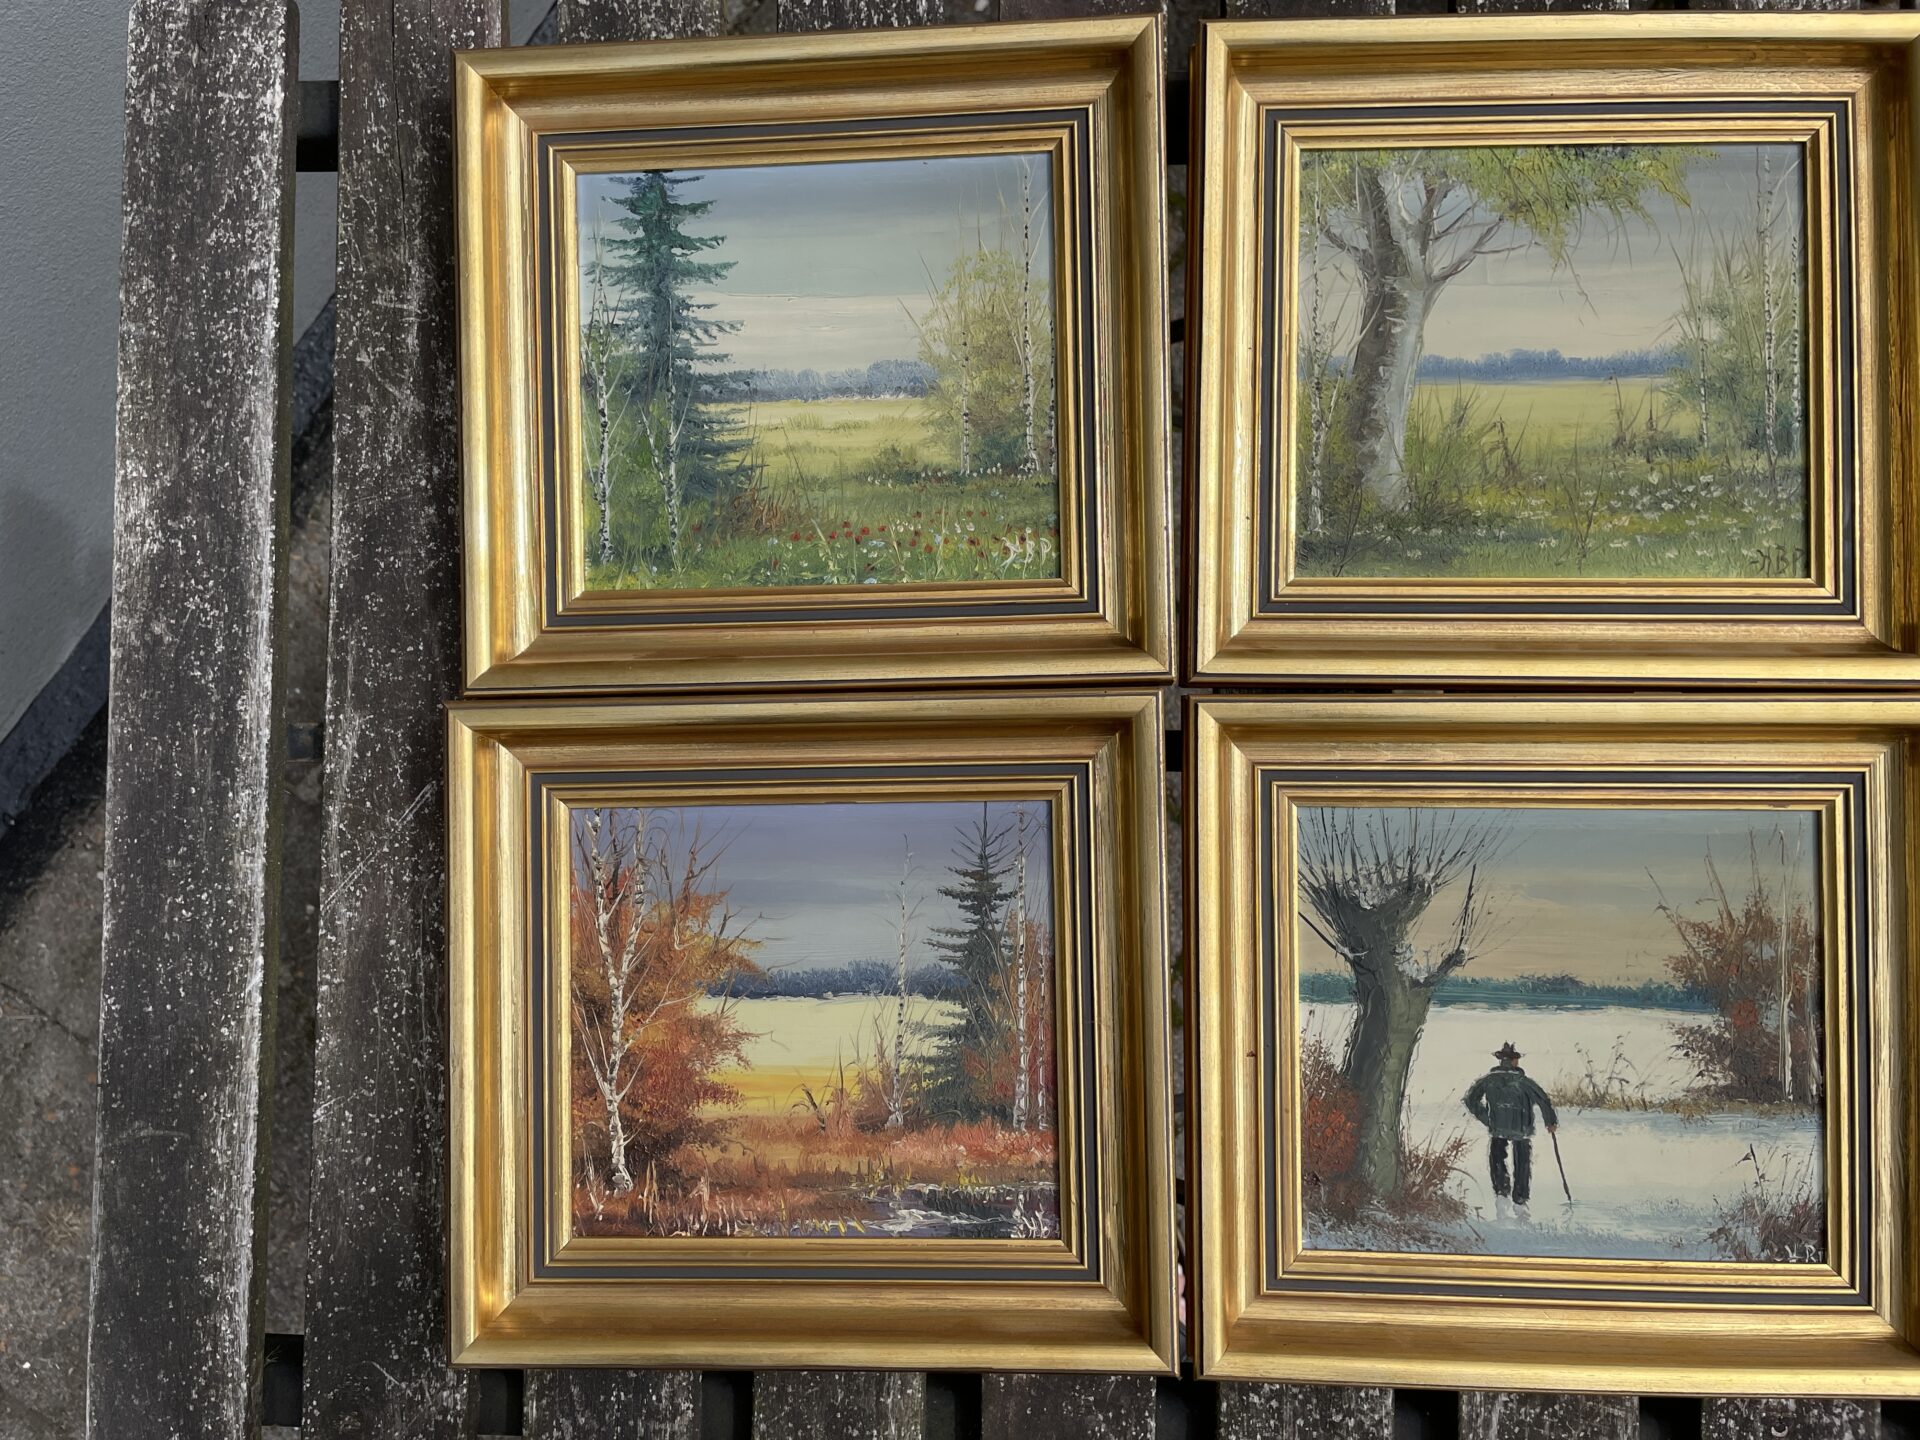 4 malerier (de 4 årstider) utydeligt signeret, rammemå 25x23 cm, samlet pris 700kr